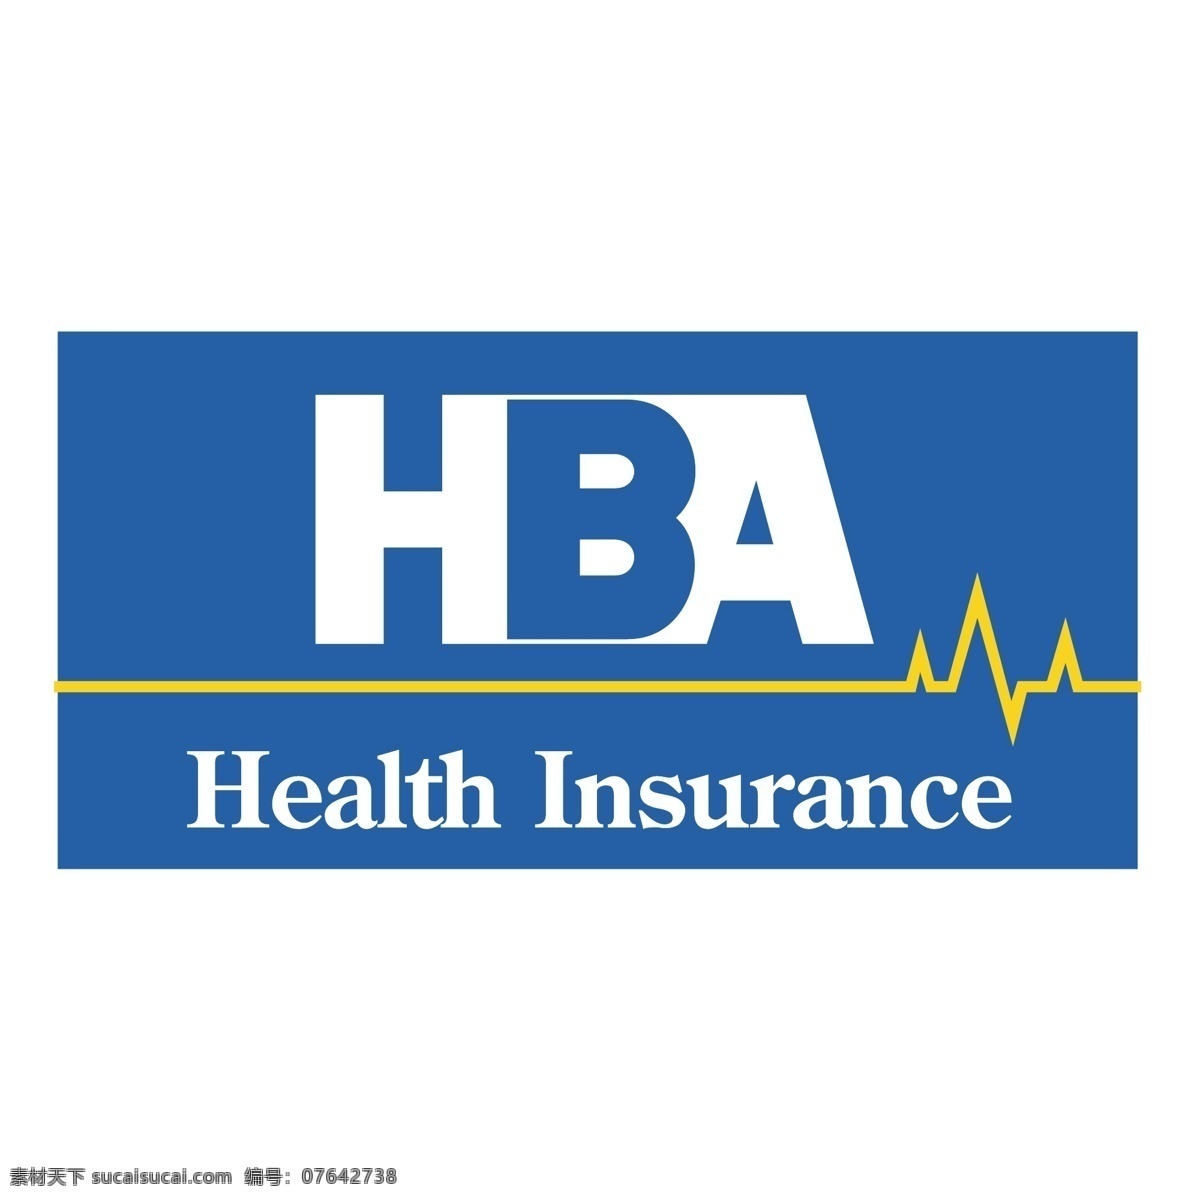 hba 健康保险 保险 健康 hba的健康 免费 矢量 表达载体 图形 矢量医疗保险 健康保险标志 医疗保险 免费医疗 矢量图 建筑家居